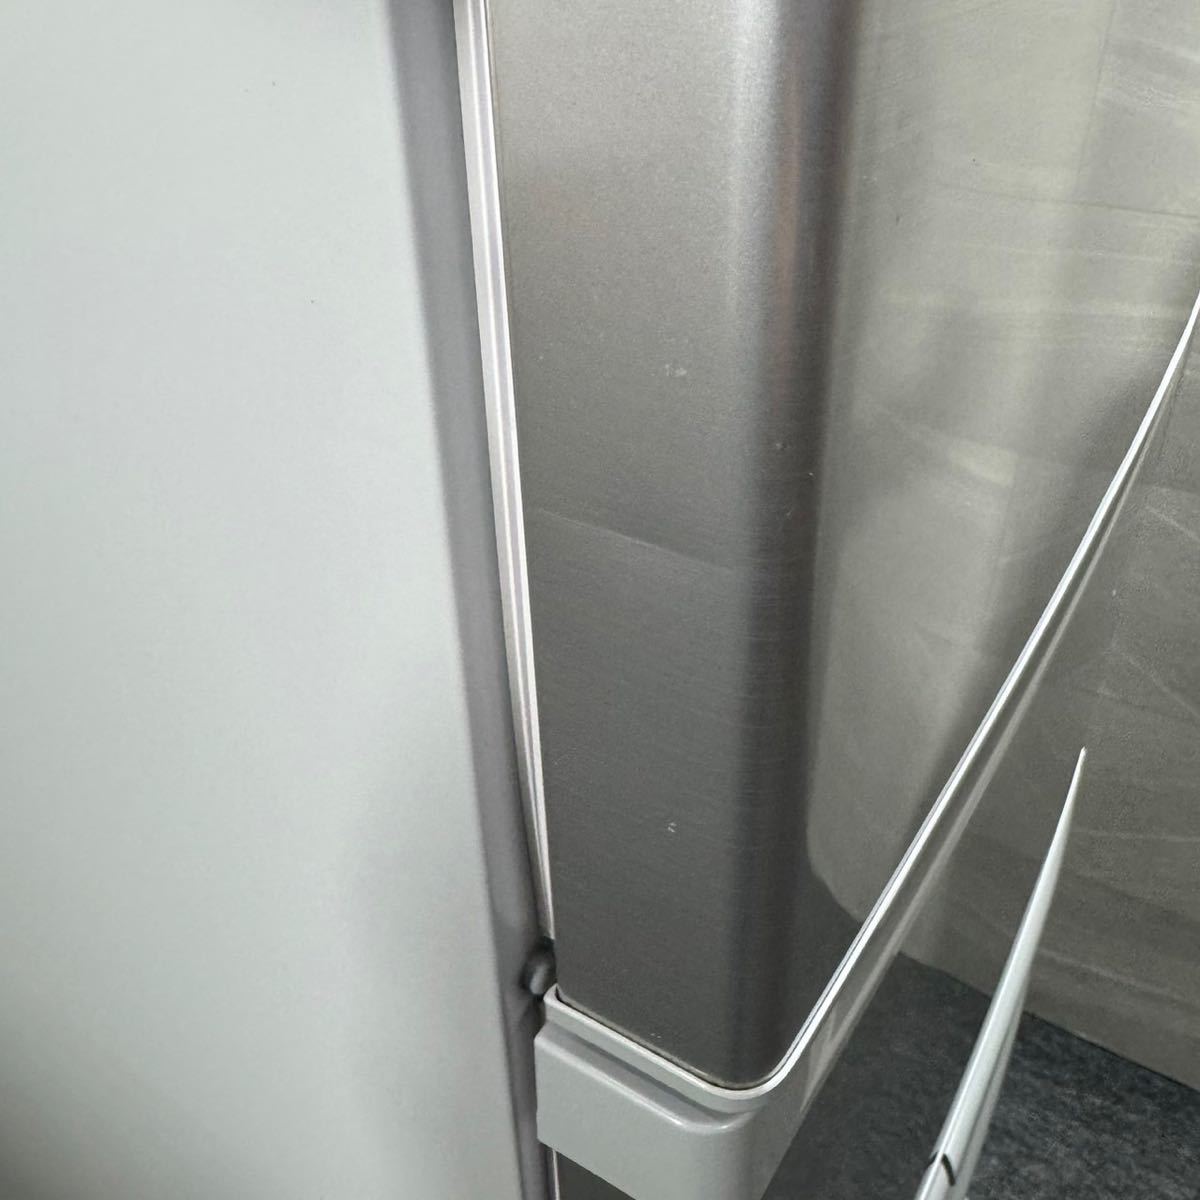 TOSHIBA 冷蔵庫 GR-K41G 410L VEGETA 大型冷蔵庫 東芝 スリムタイプ d1604 格安 お買い得 ノンフロン冷凍冷蔵庫_画像10